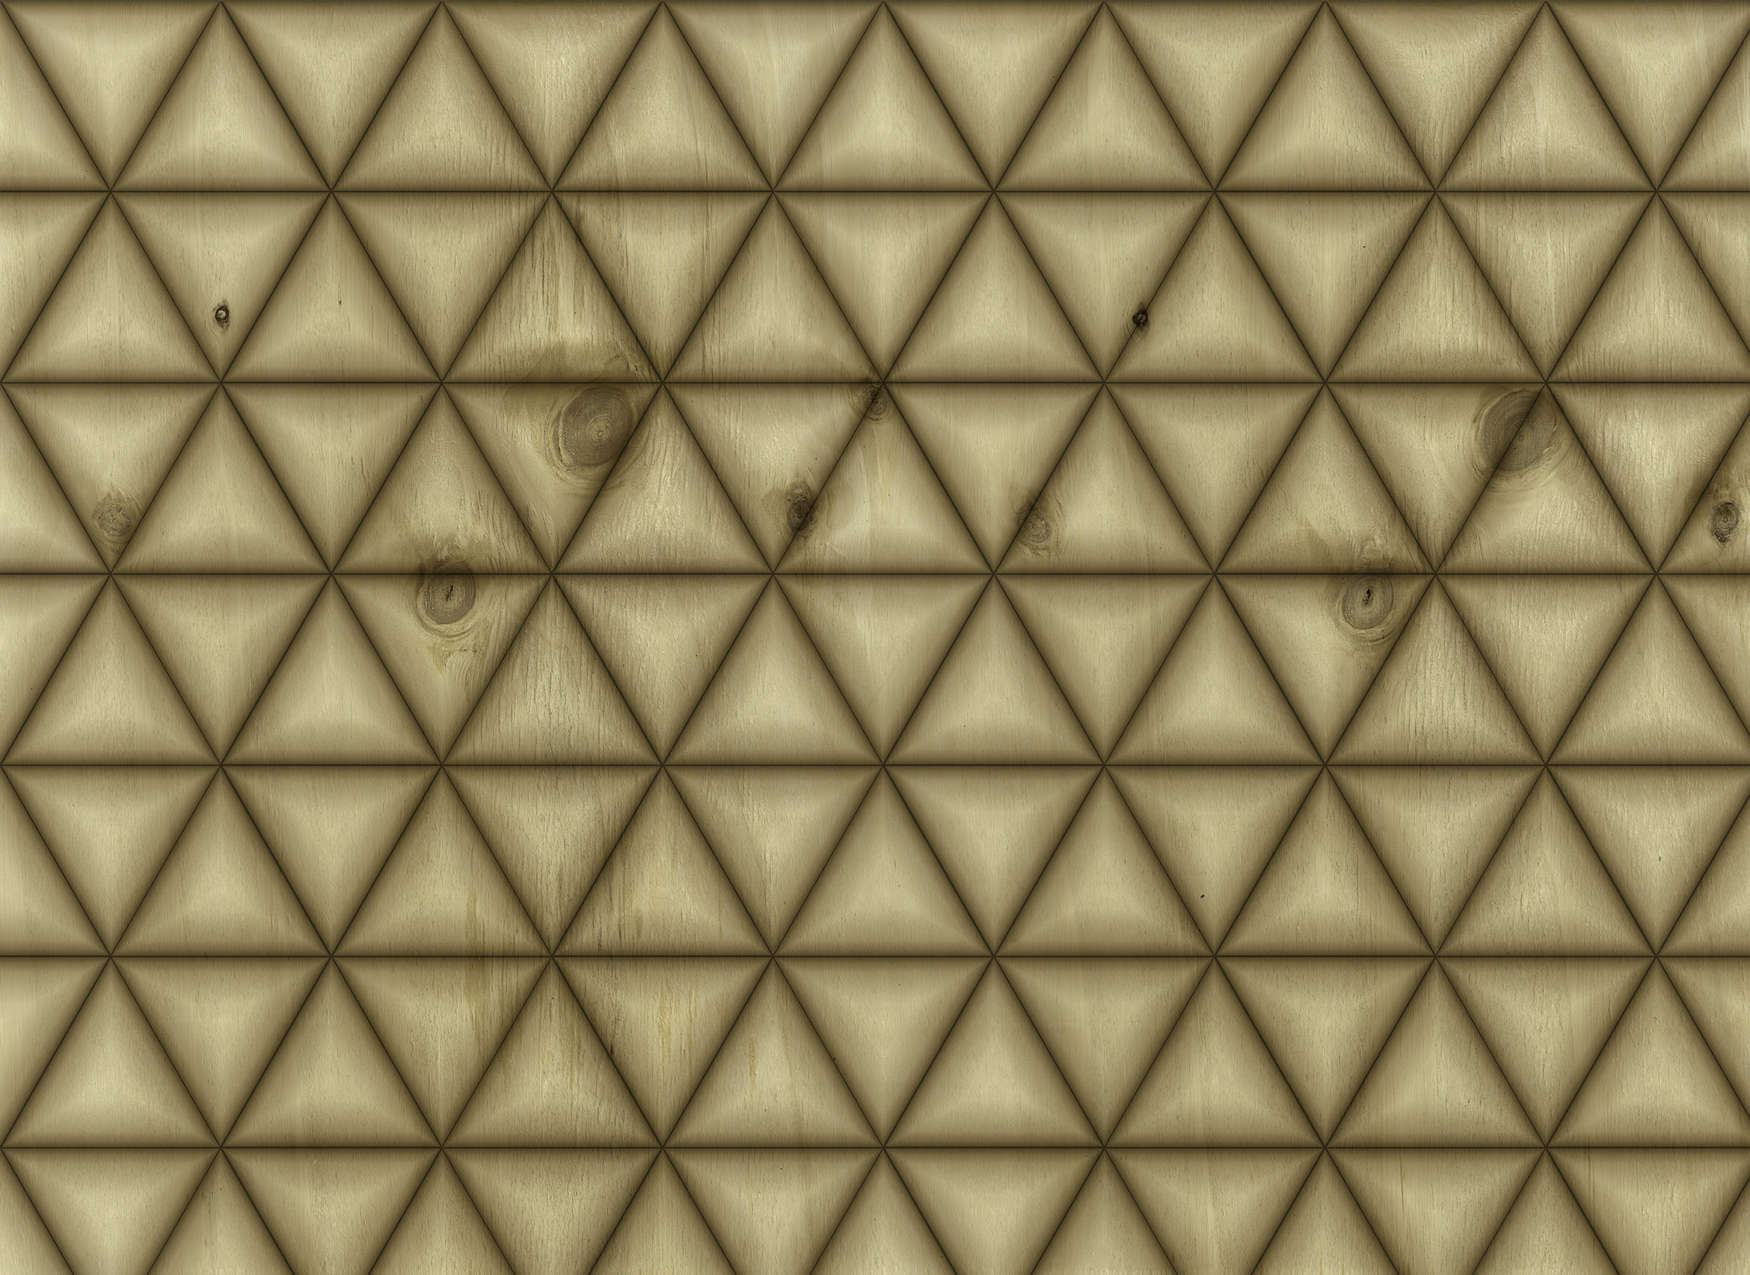             Photo wallpaper geometric triangle pattern in wood look - Brown, Beige
        